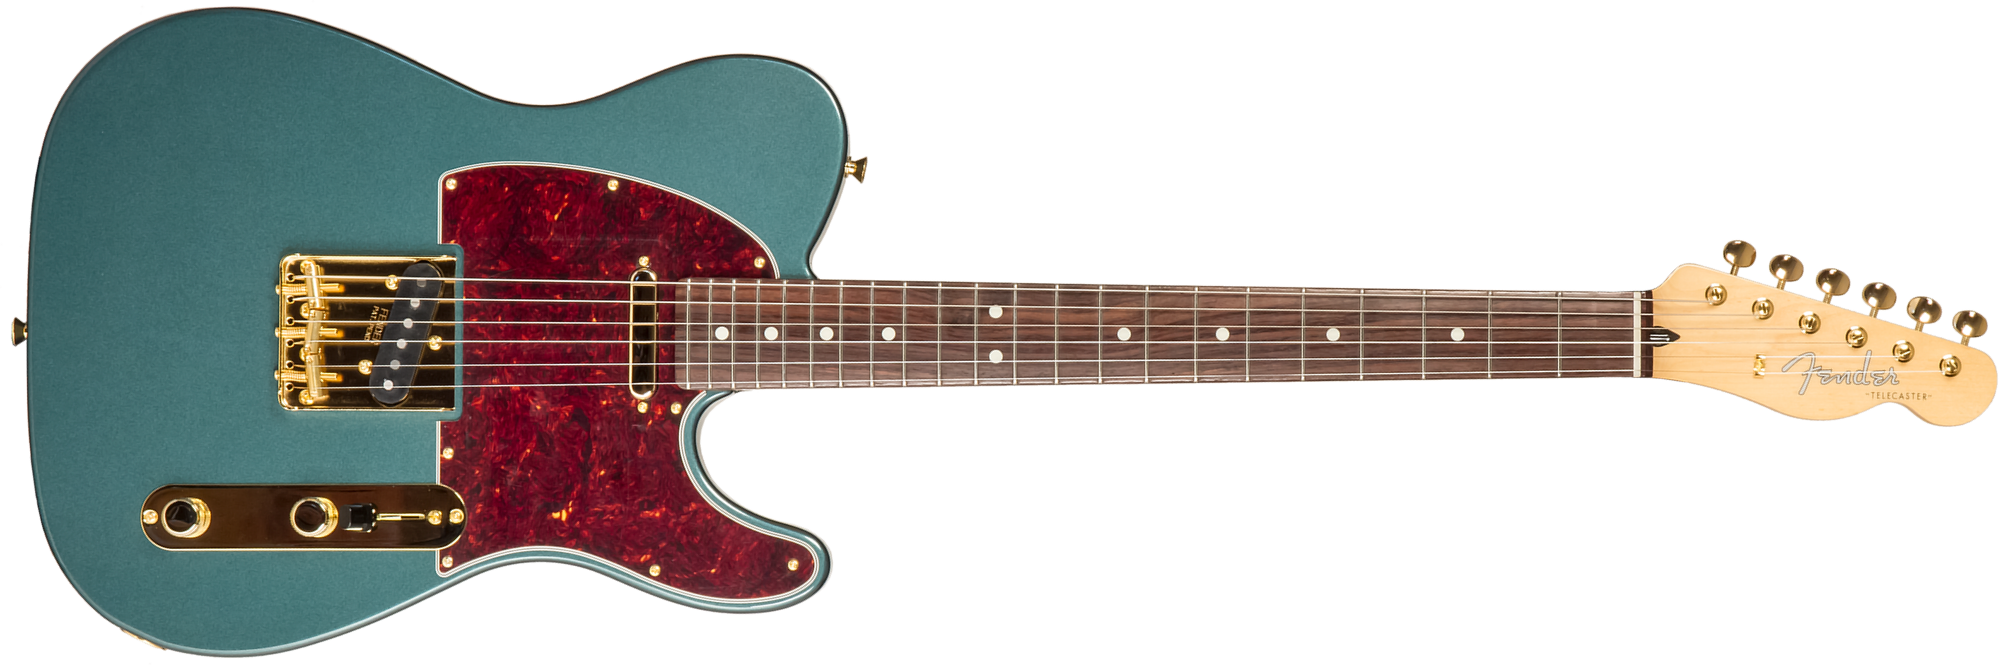 Fender Tele Hybrid Ii Jap 2s Ht Rw - Sherwood Green Metallic - Guitare Électrique Forme Tel - Main picture